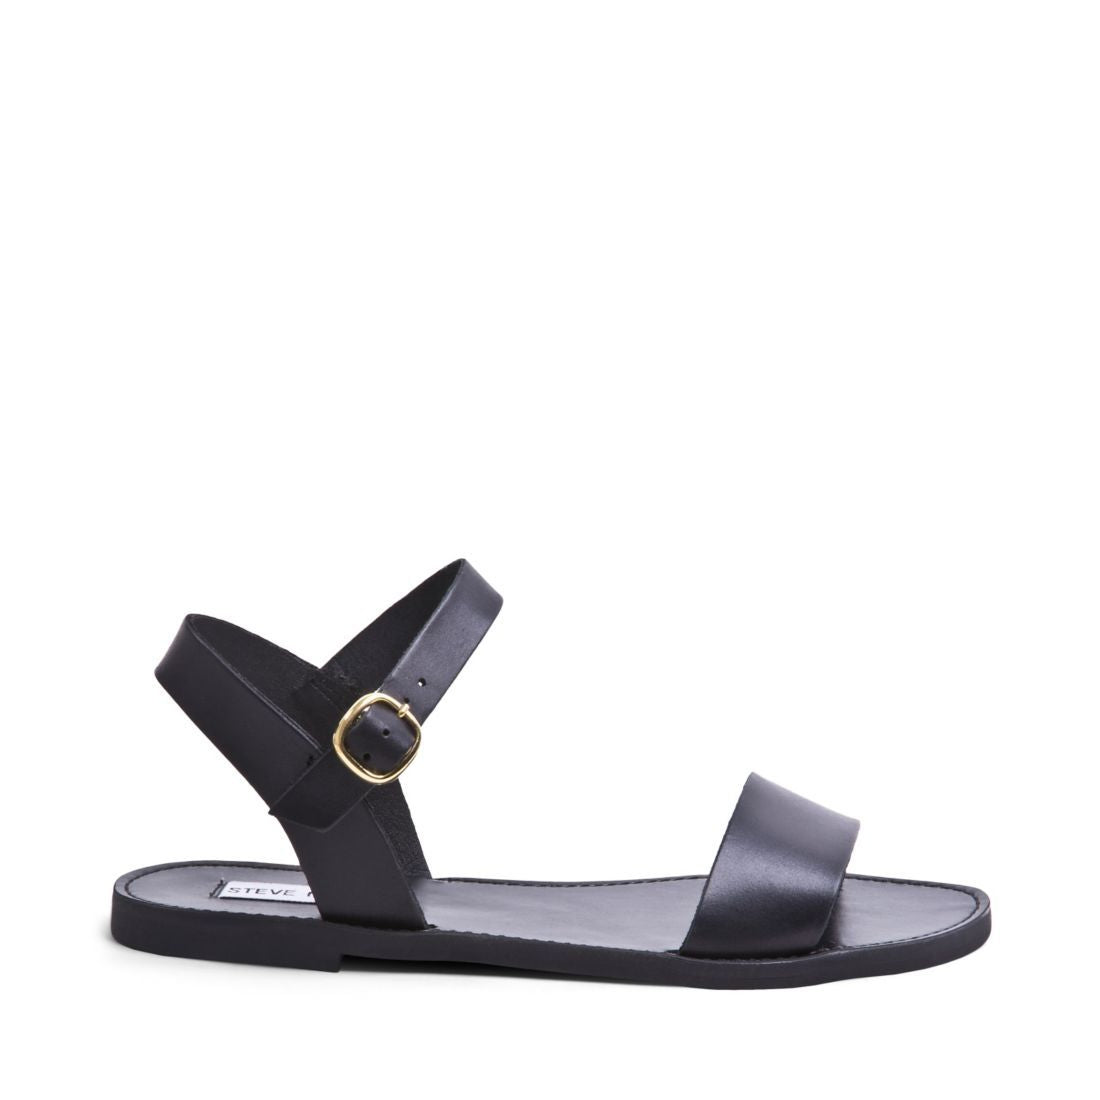 DONDDI-M Black Leather Women's Sandals | Women's Designer Sandals ...